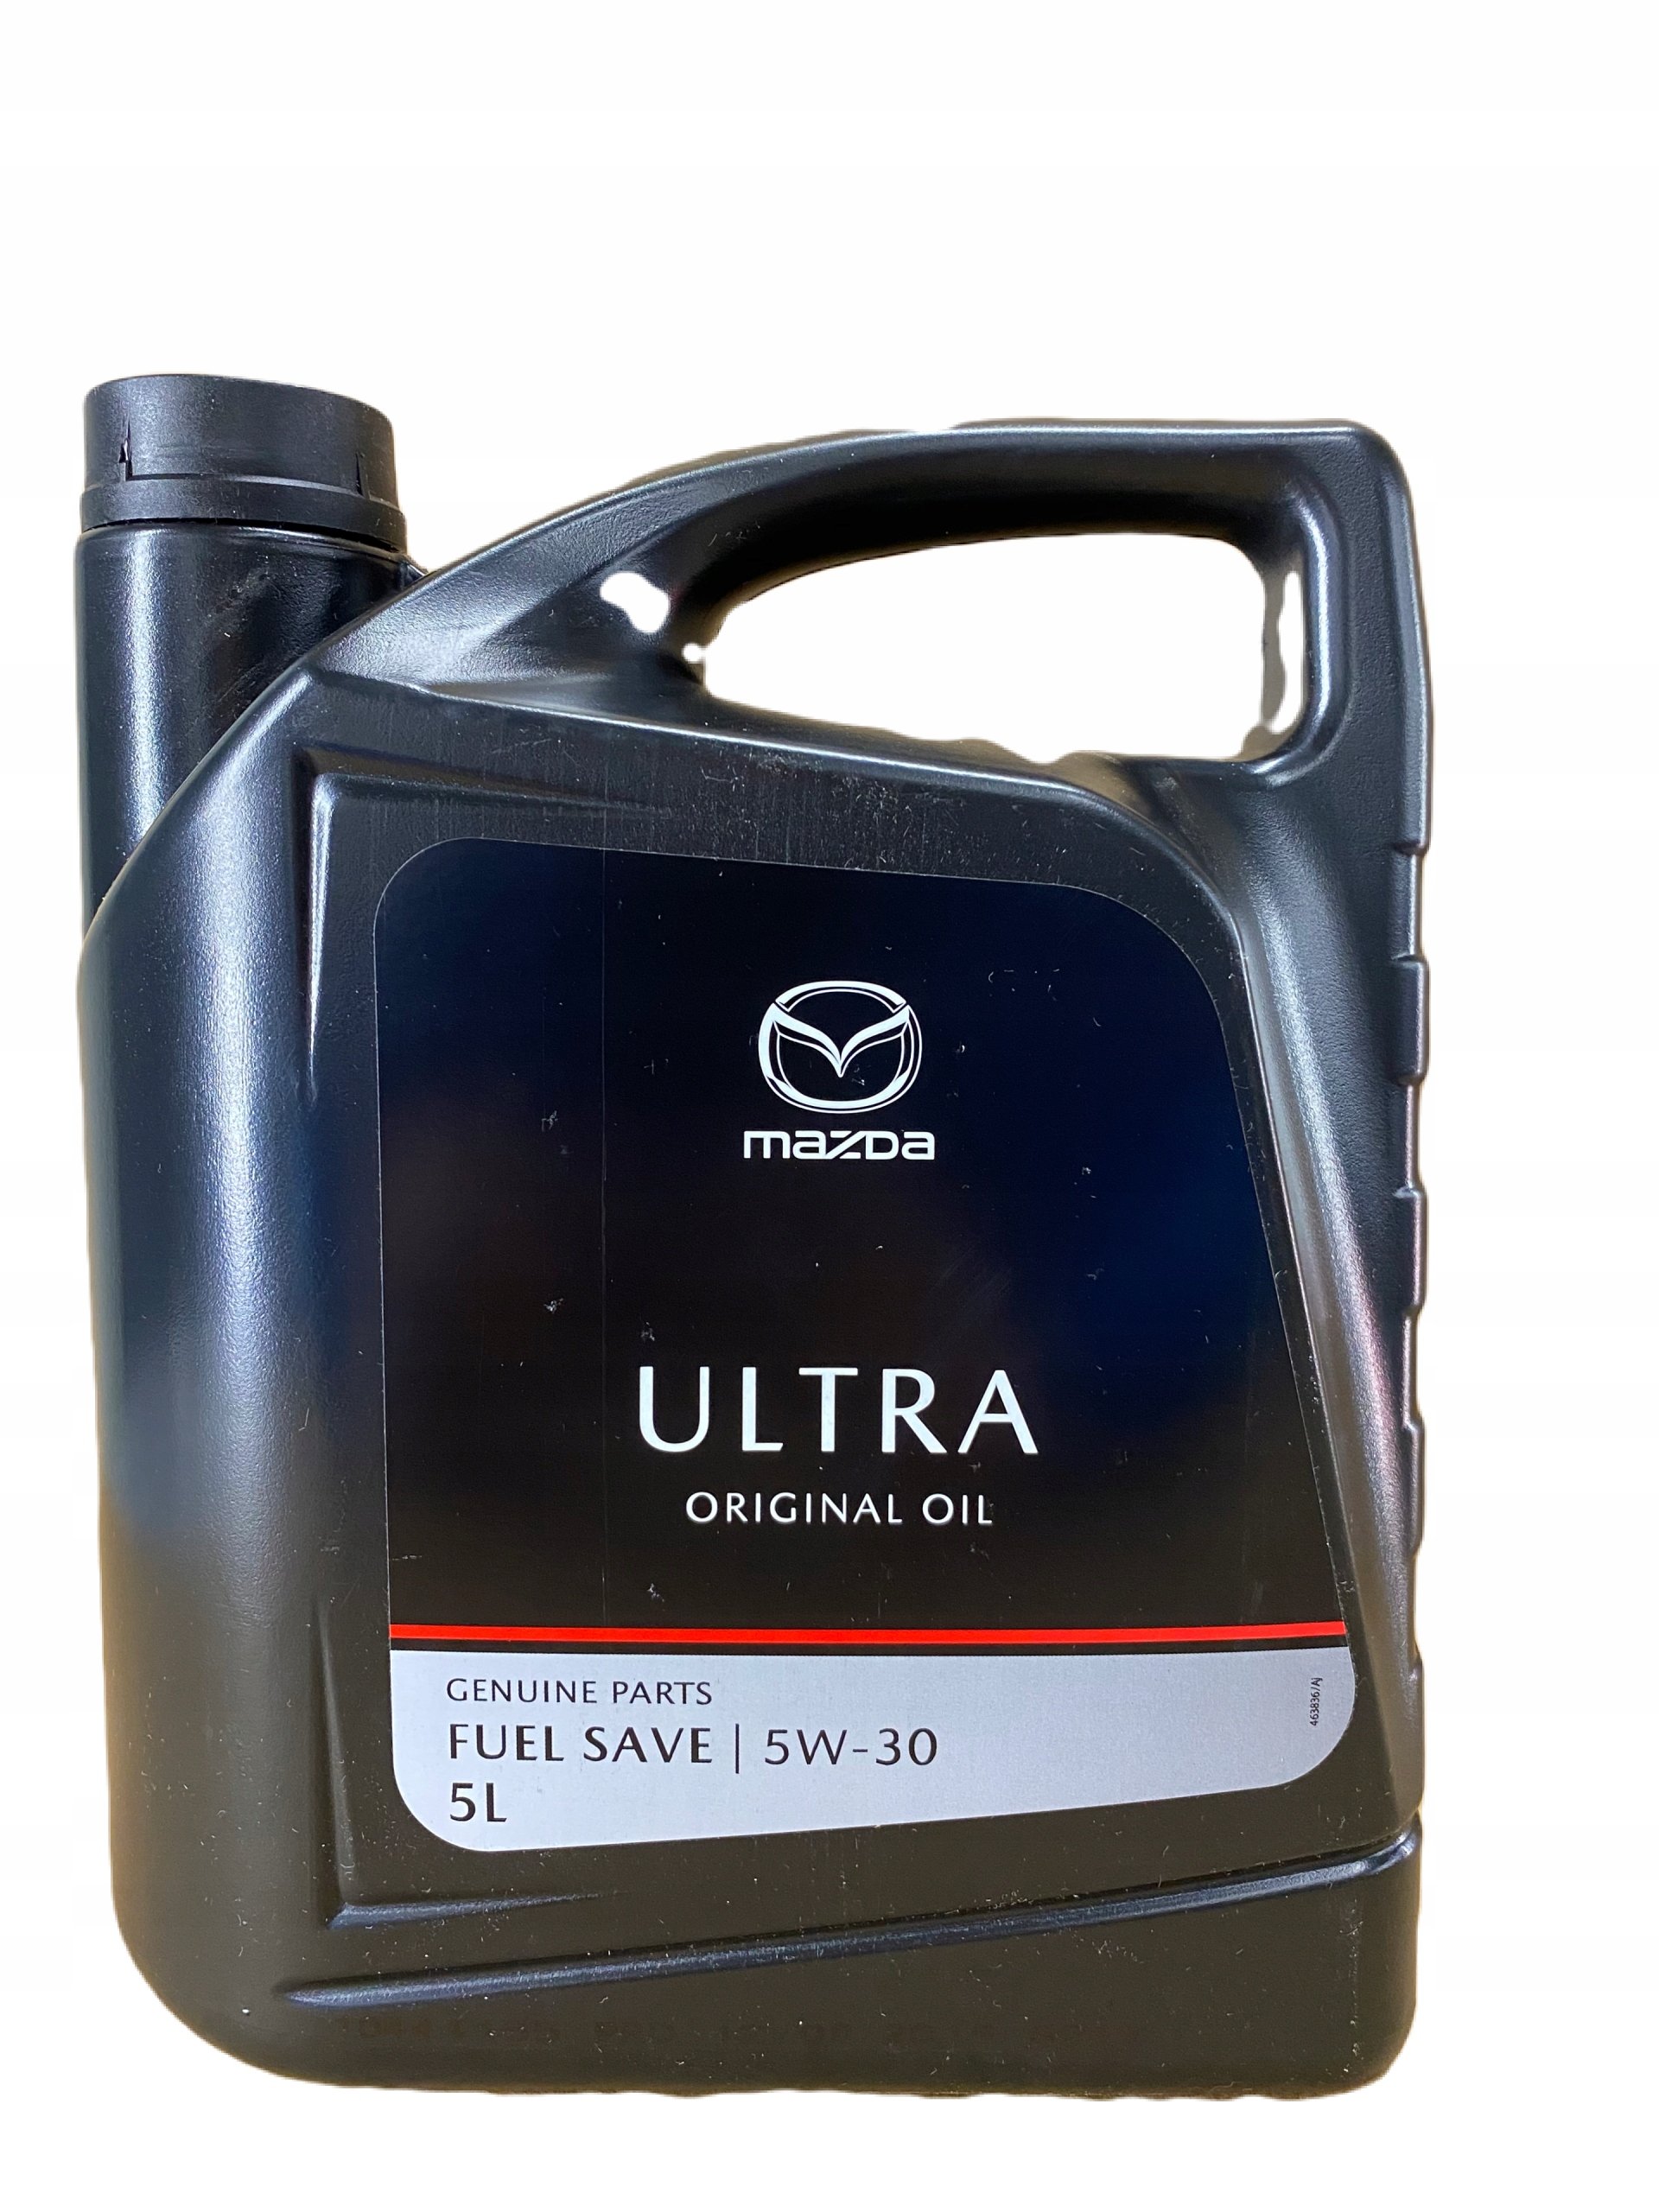 Масло ультра оригинал. Mazda Original Oil Ultra 5w-30. Mazda Ultra Original Oil 5w30 5l engine Oil. Масло Мазда 5w30 оригинал артикул. Mazda Ultra 5w30 5l.